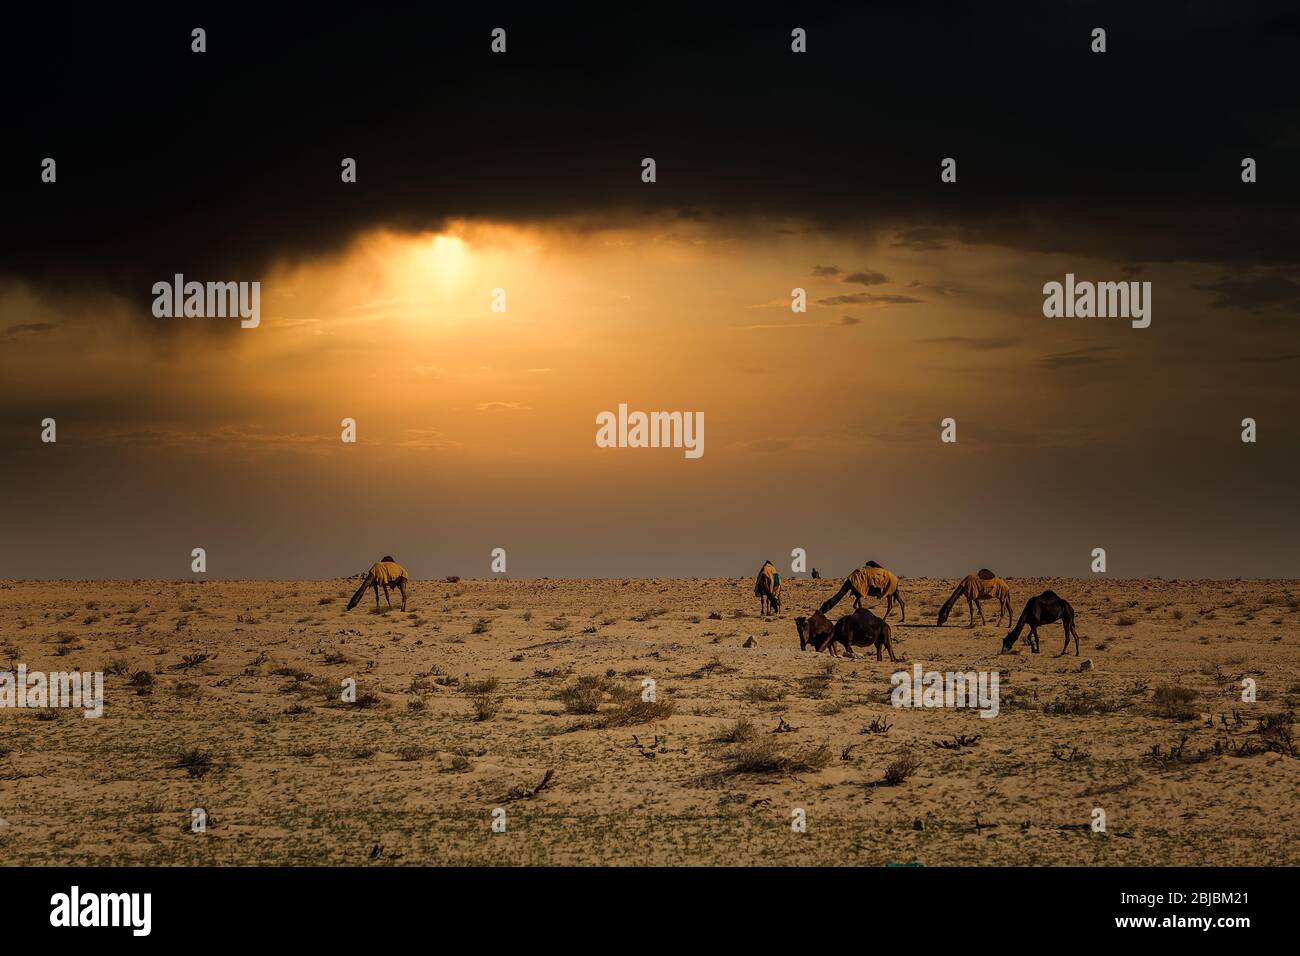 Camels on the desert dramatic sunset cloud background at Al-Sarar Saudi Arabia. Stock Photo